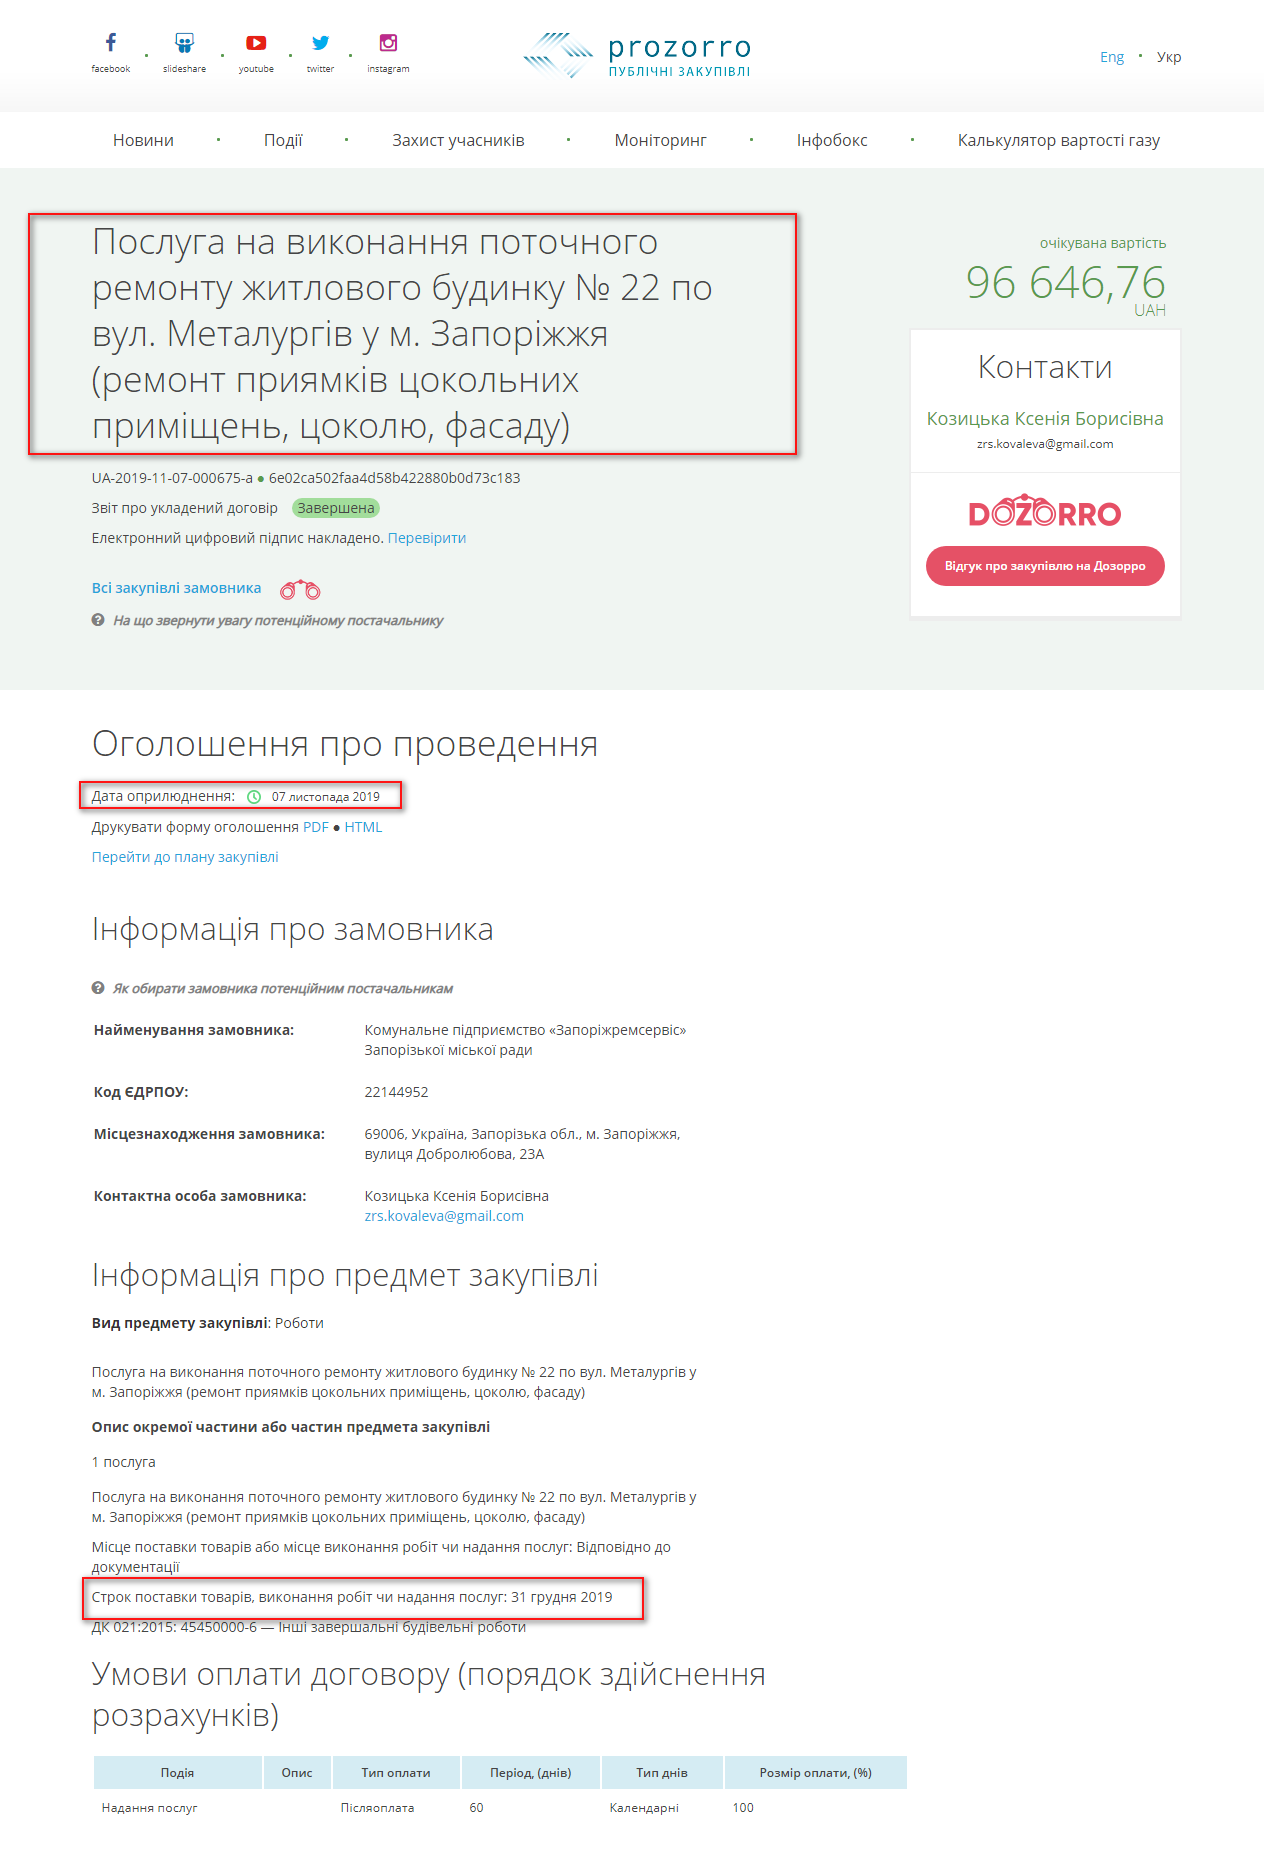 https://prozorro.gov.ua/tender/UA-2019-11-07-000675-a